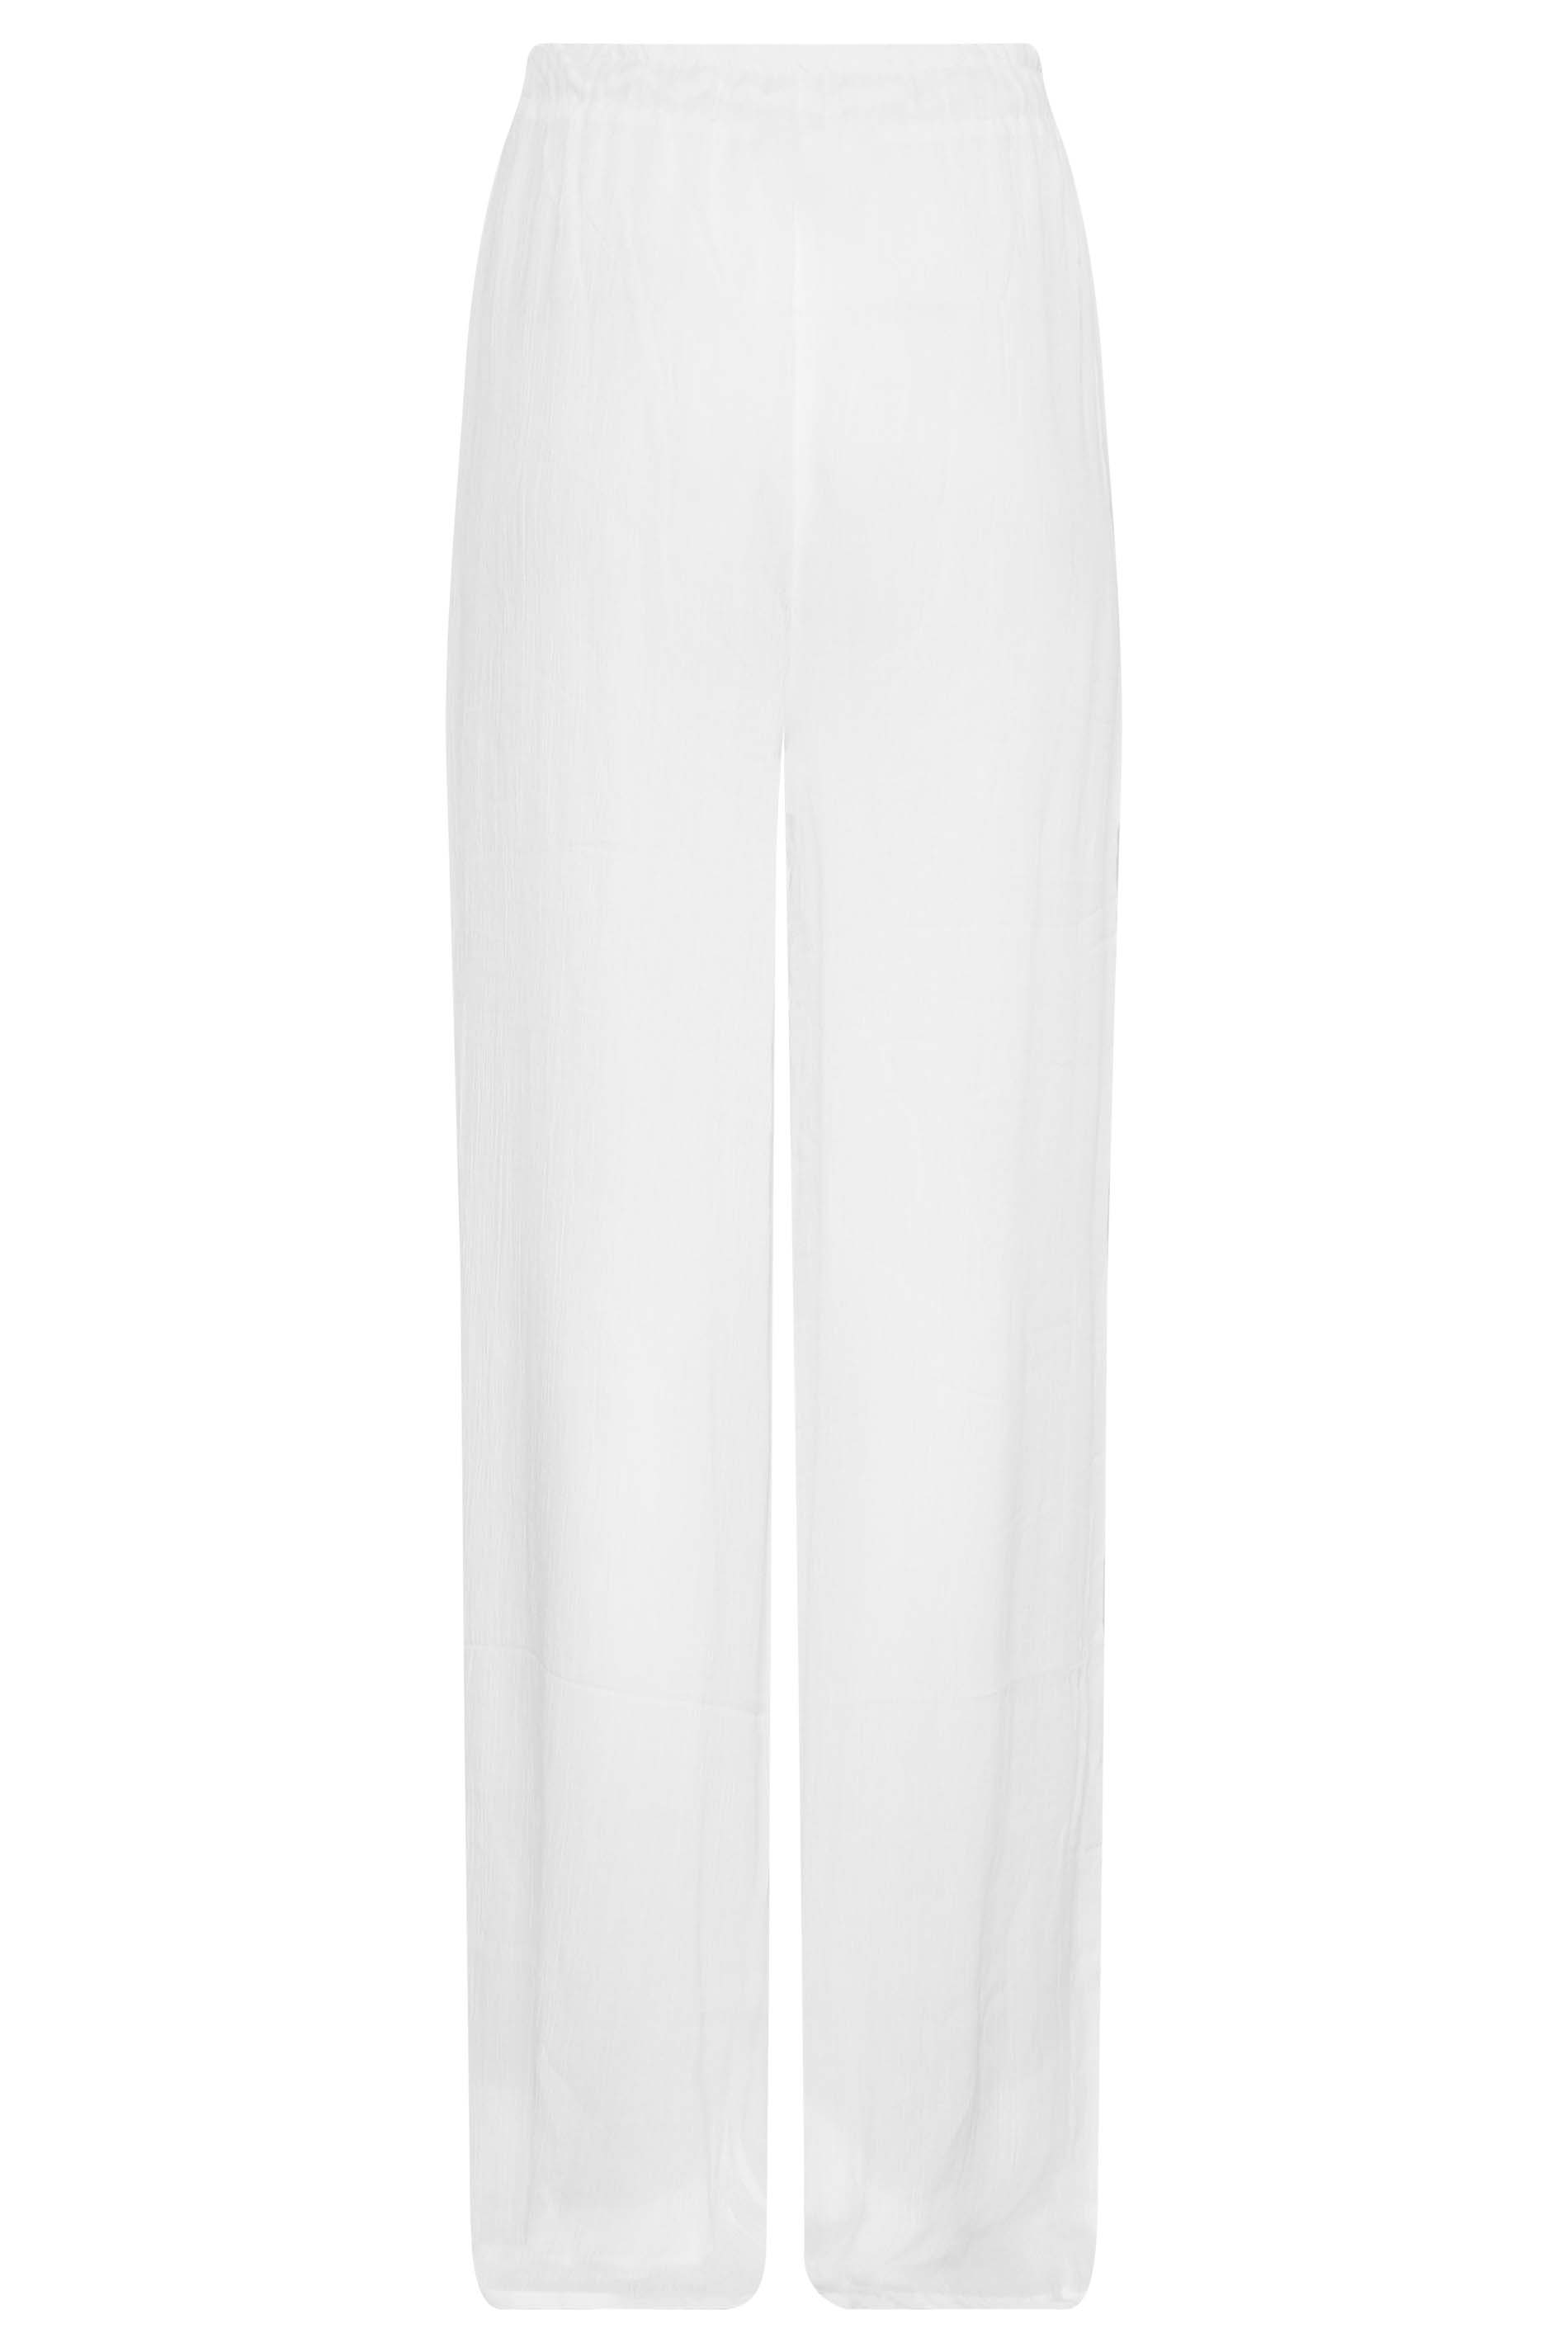 LTS Tall Women's White Wide Leg Beach Trousers